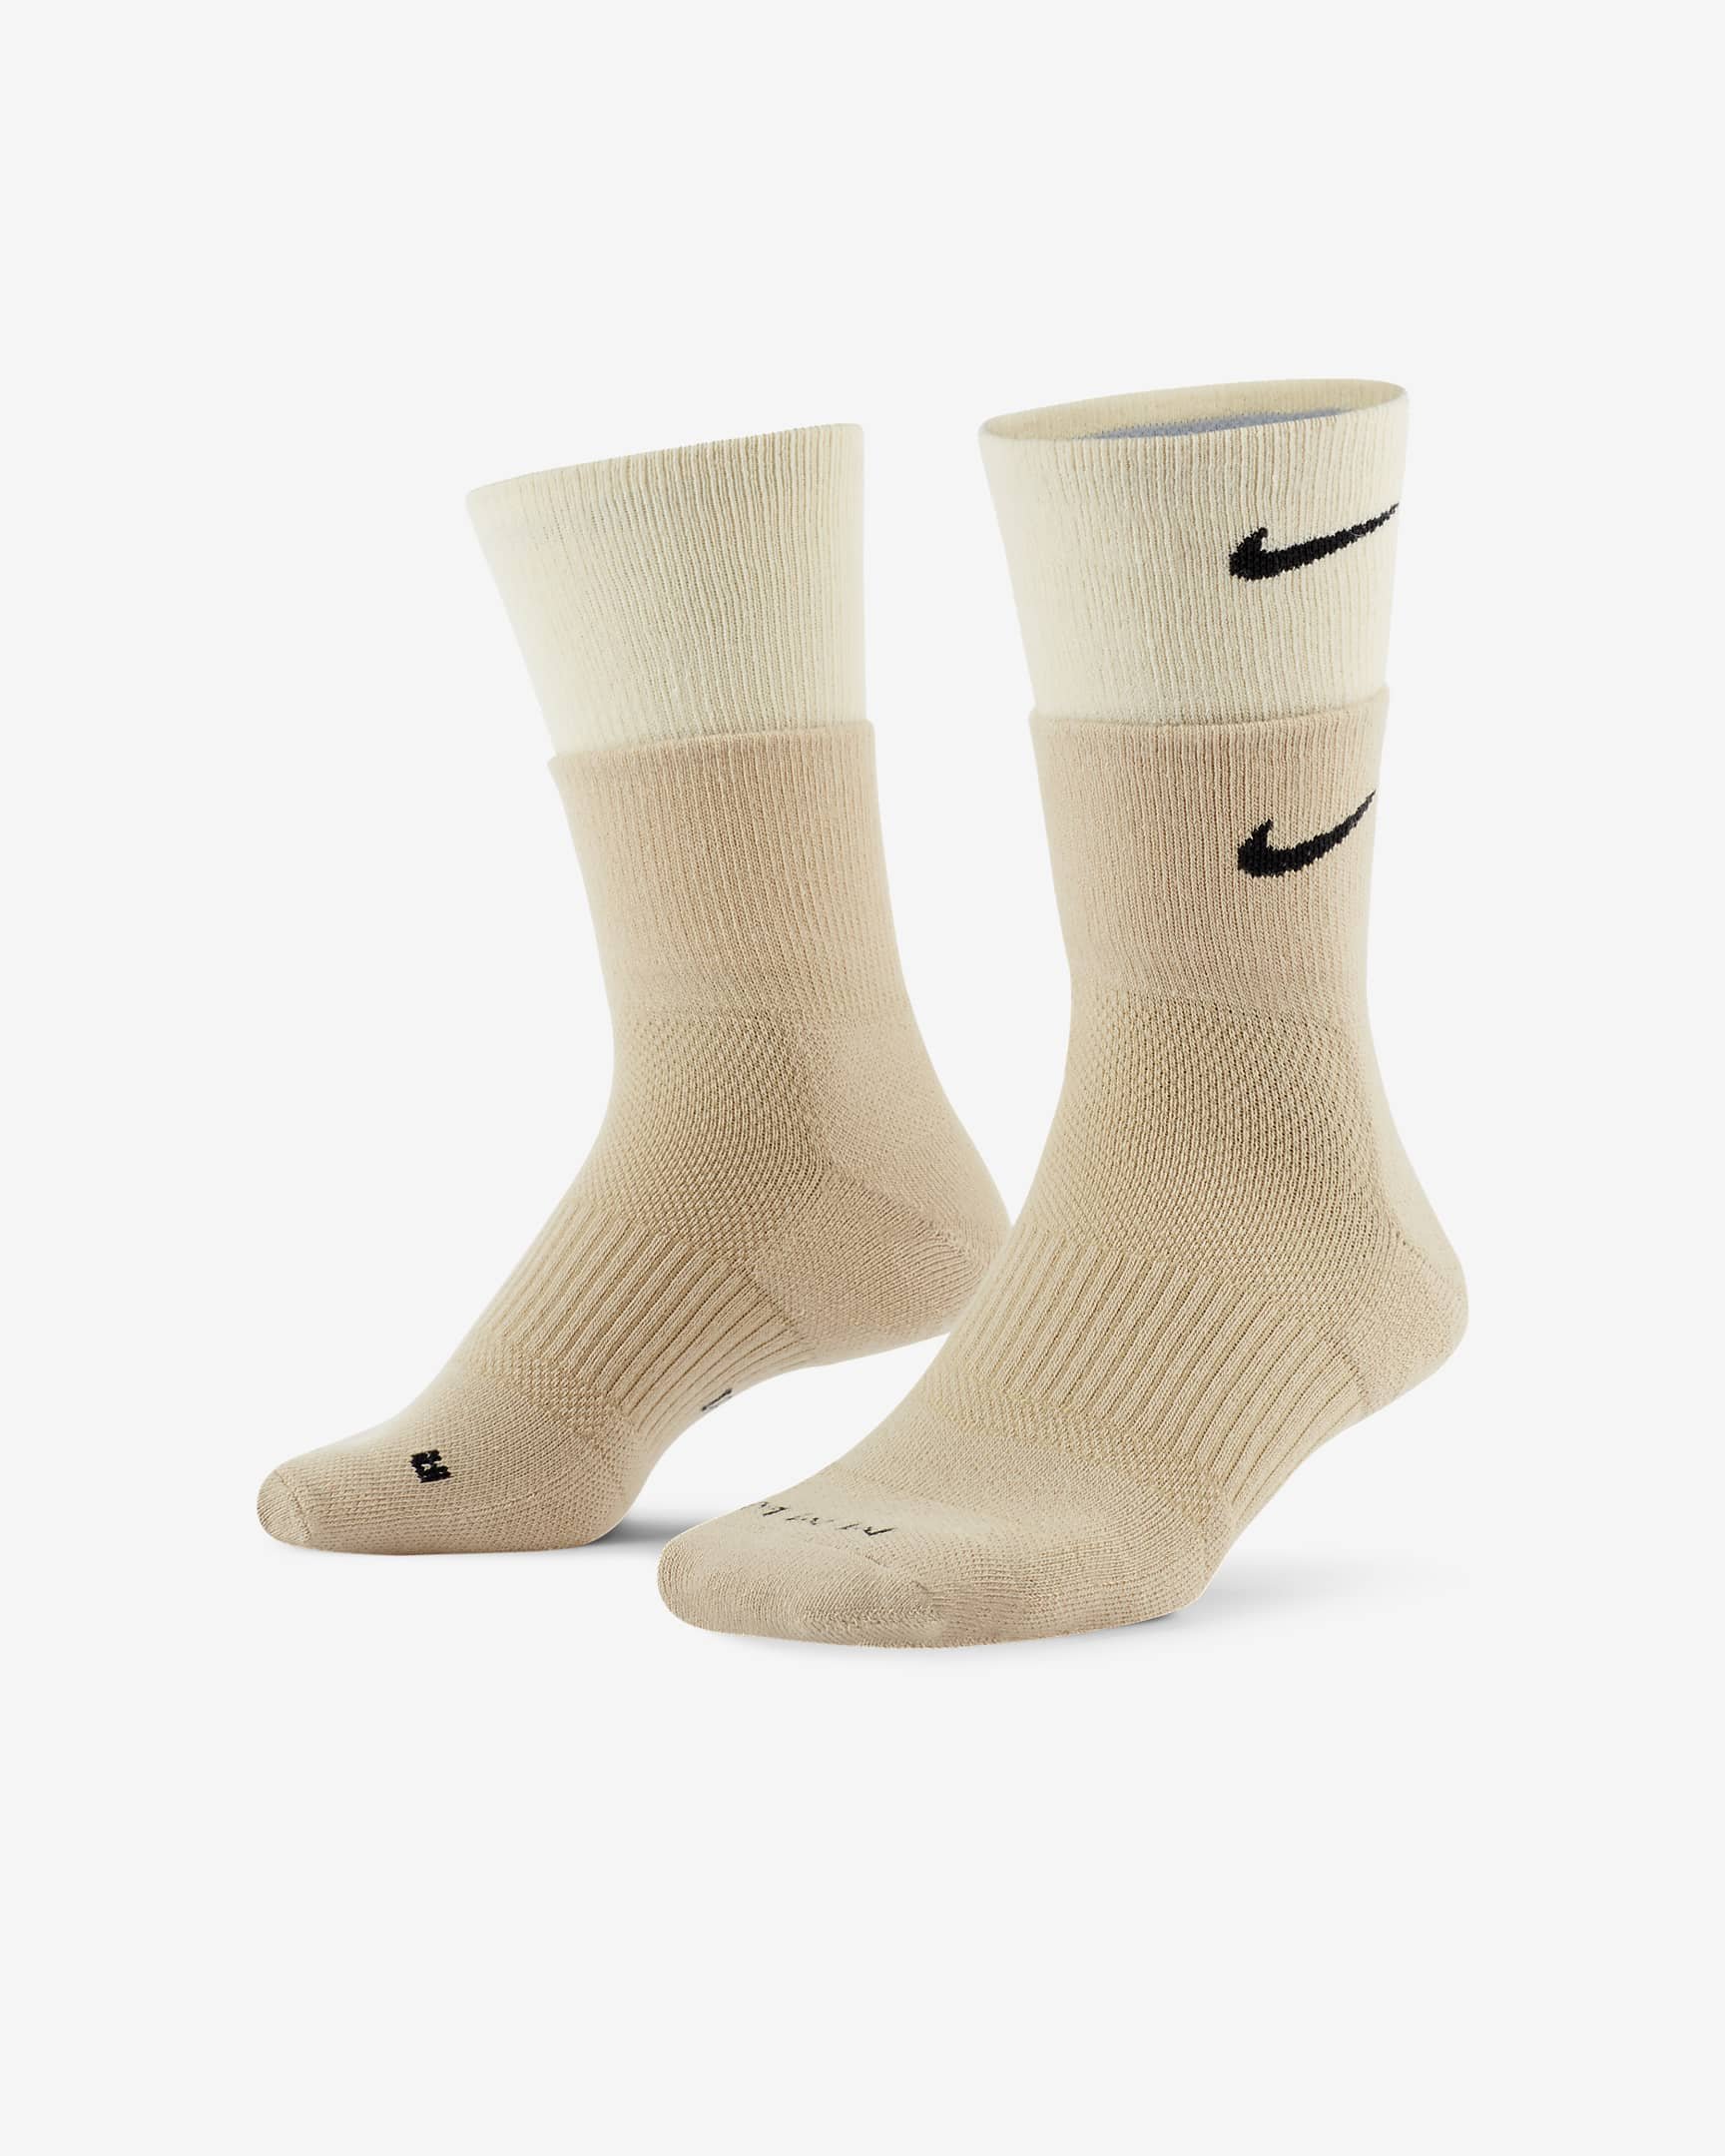 CNK-Nike-MMW-socks-tan.jpeg